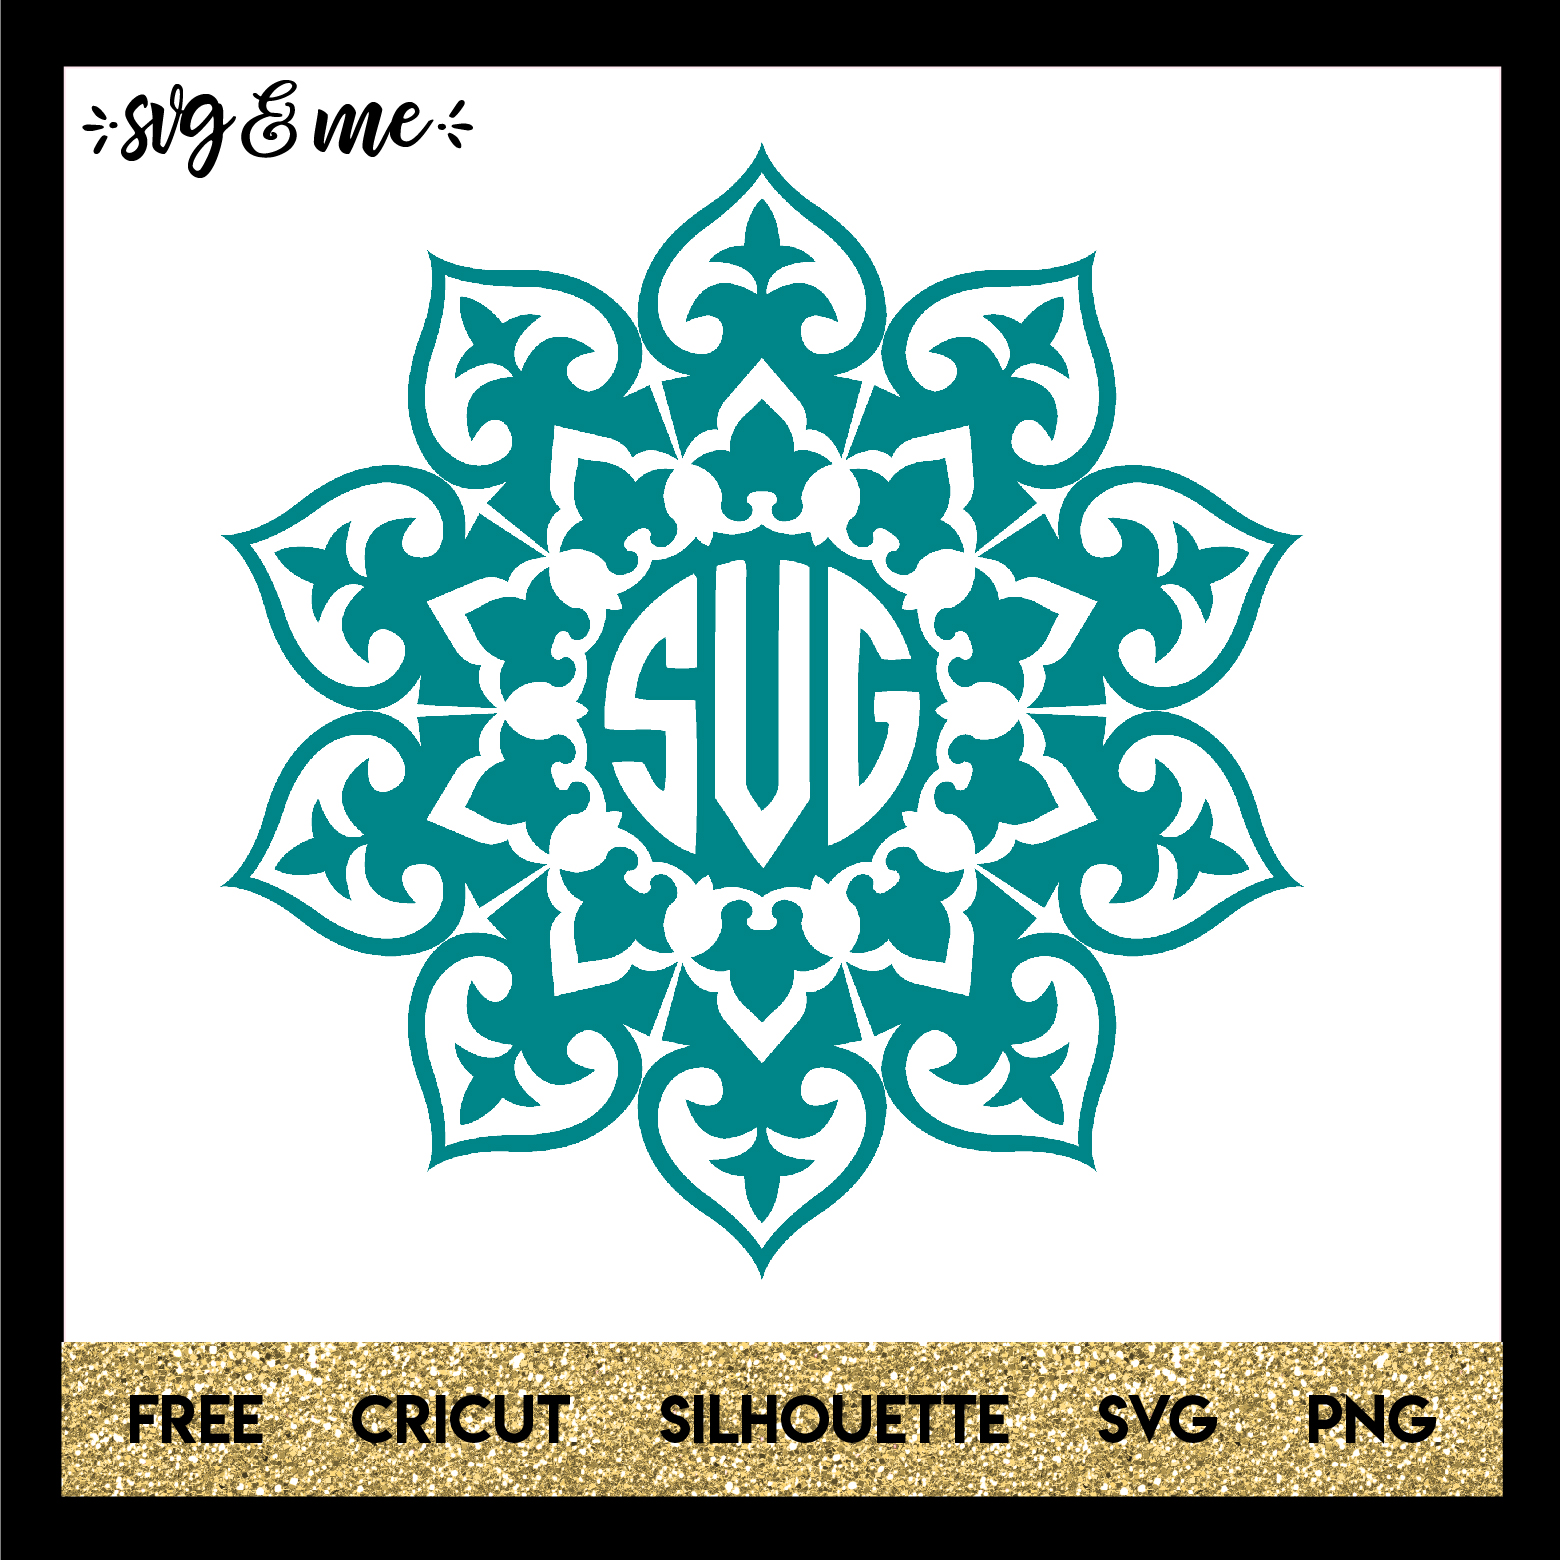 FREE SVG CUT FILE for Cricut, Silhouette and more - Mandala Teal Monogram SVG